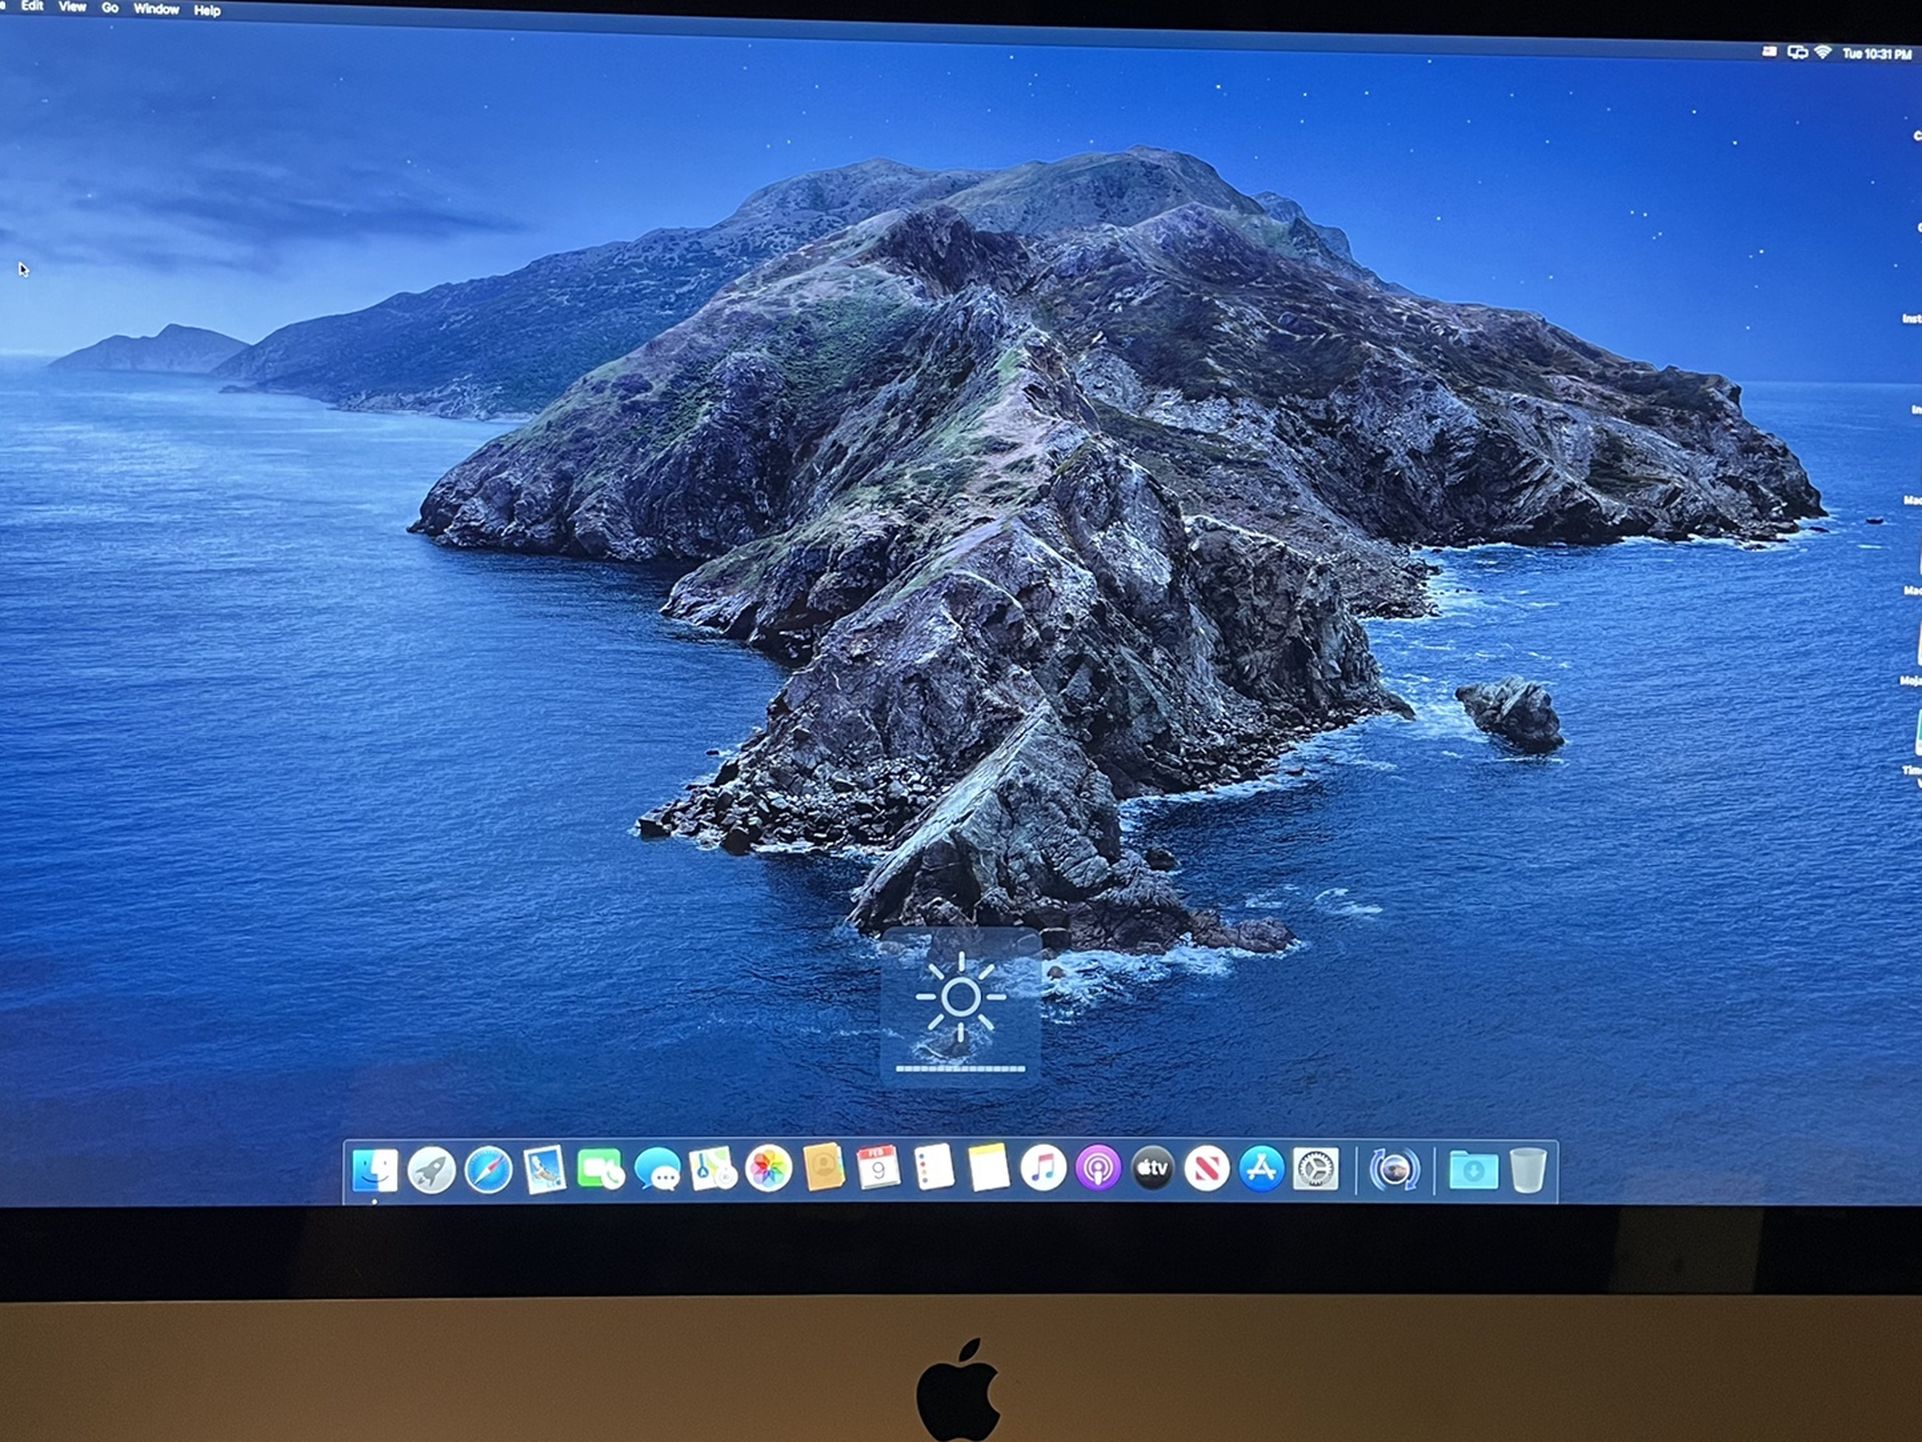 Apple iMac (27-inch, Late 2009) - *Upgraded Storage, Memory, OS*